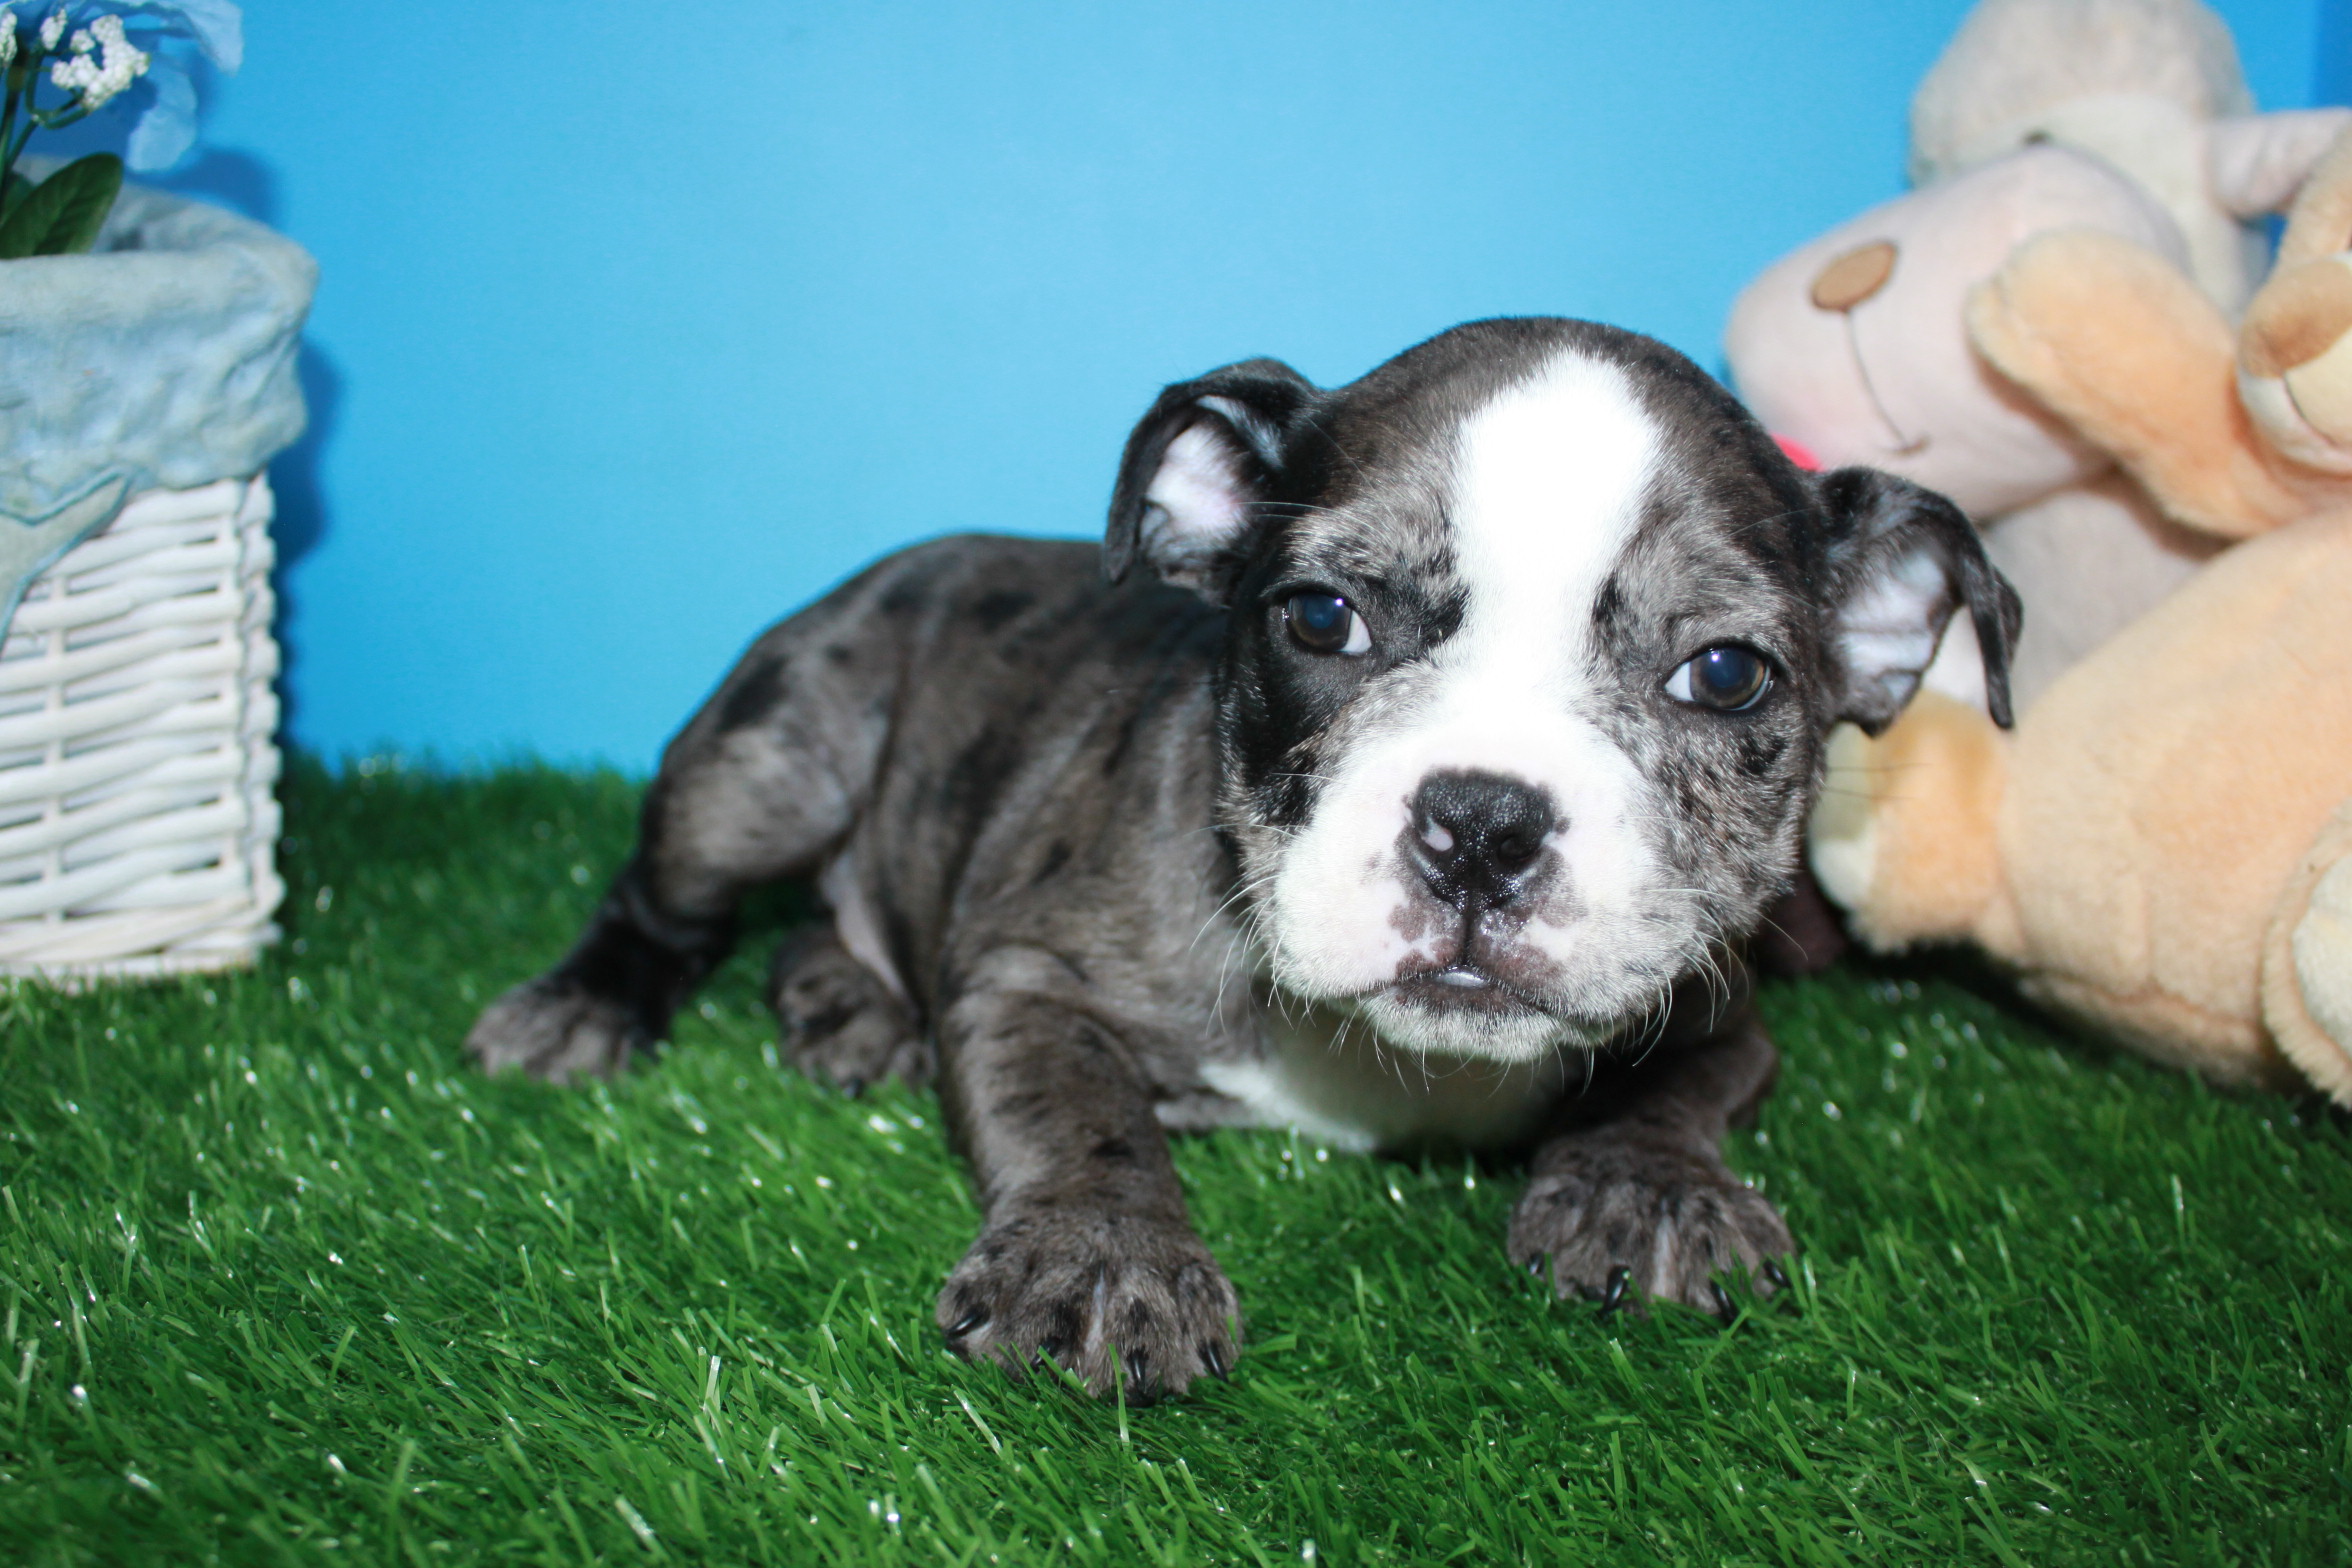 Mini Bulldog Puppies For Sale - Long Island Puppies